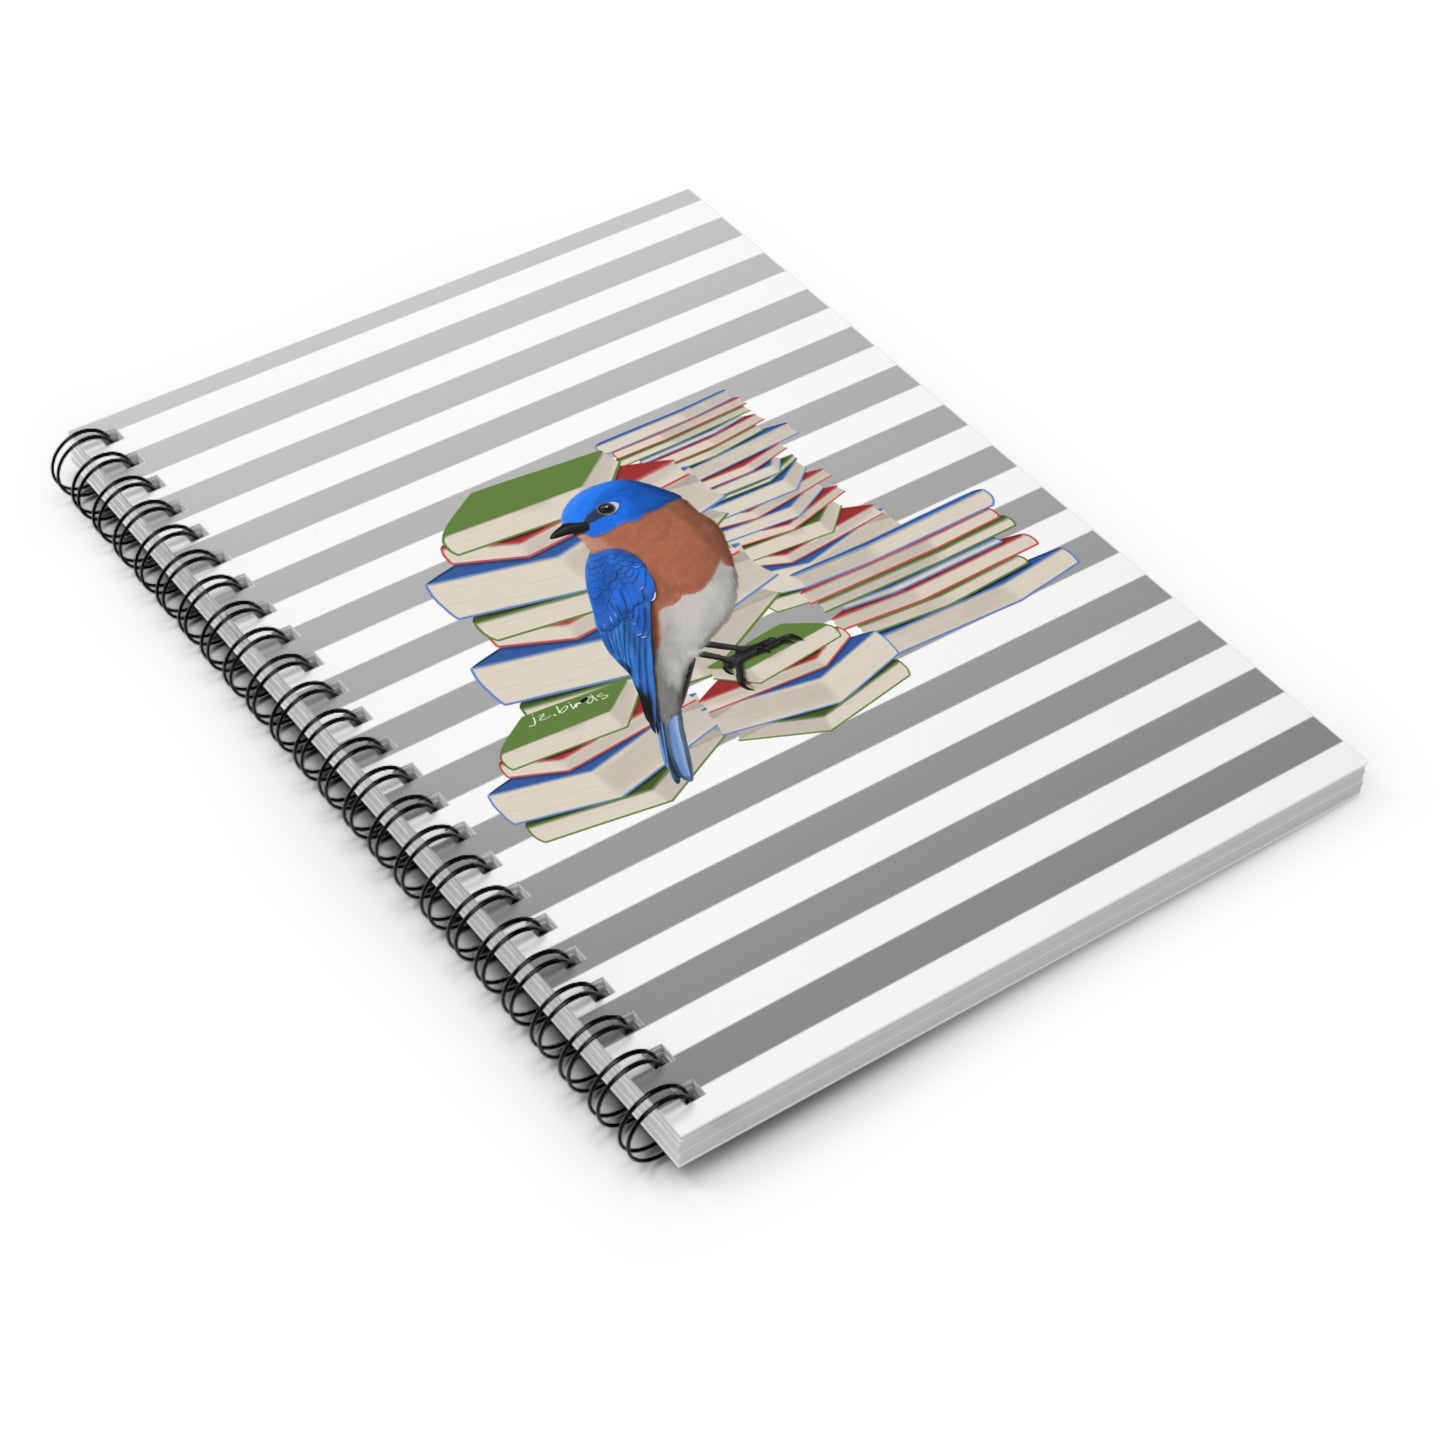 Eastern Bluebird Bird with Books Birdlover Bookworm Spiral Notebook Ruled Line 6" x 8"